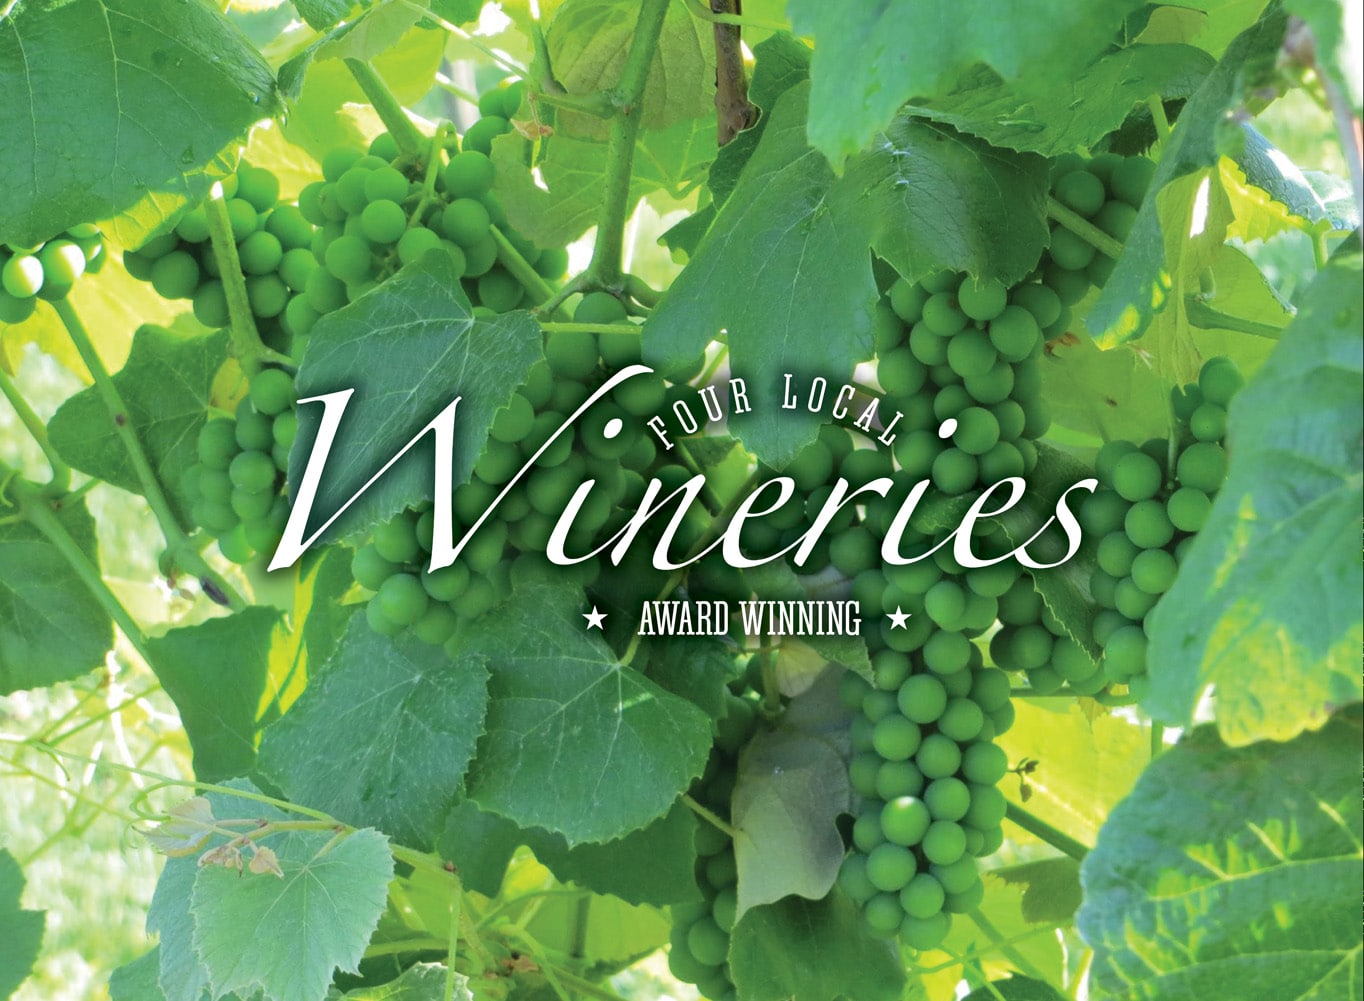 Website banner showcasing Local Wineries